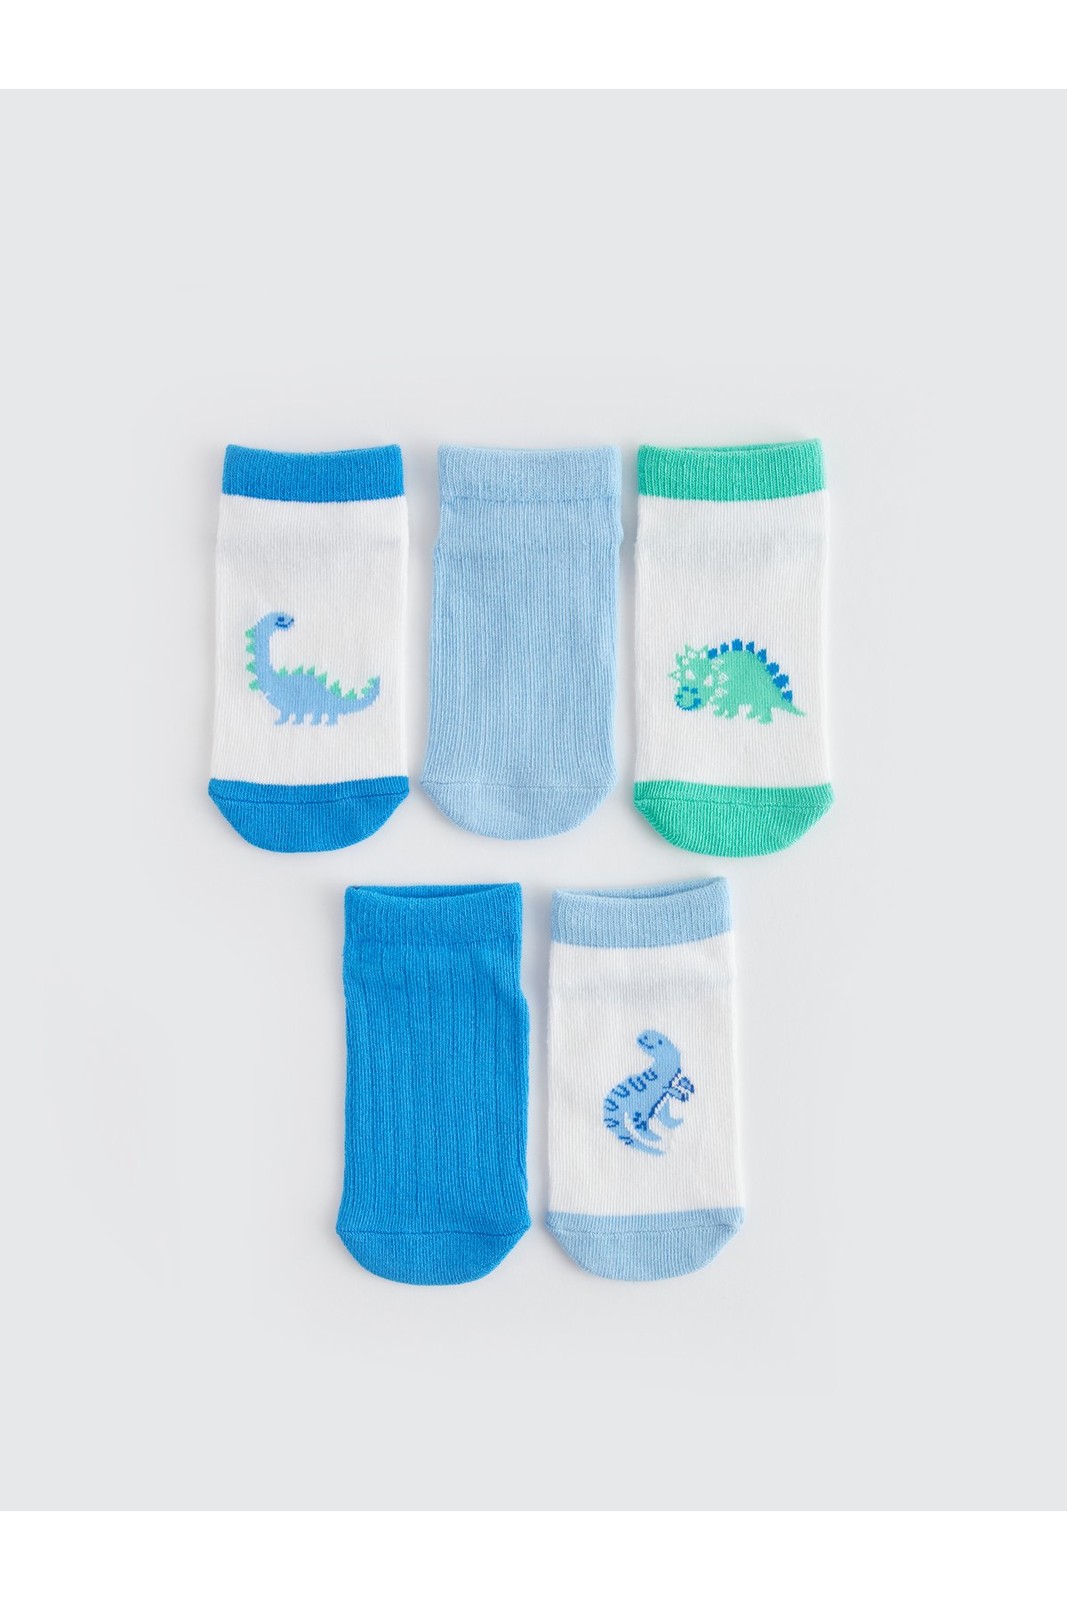 LC Waikiki 5-Pack Patterned Baby Boy Booties Socks